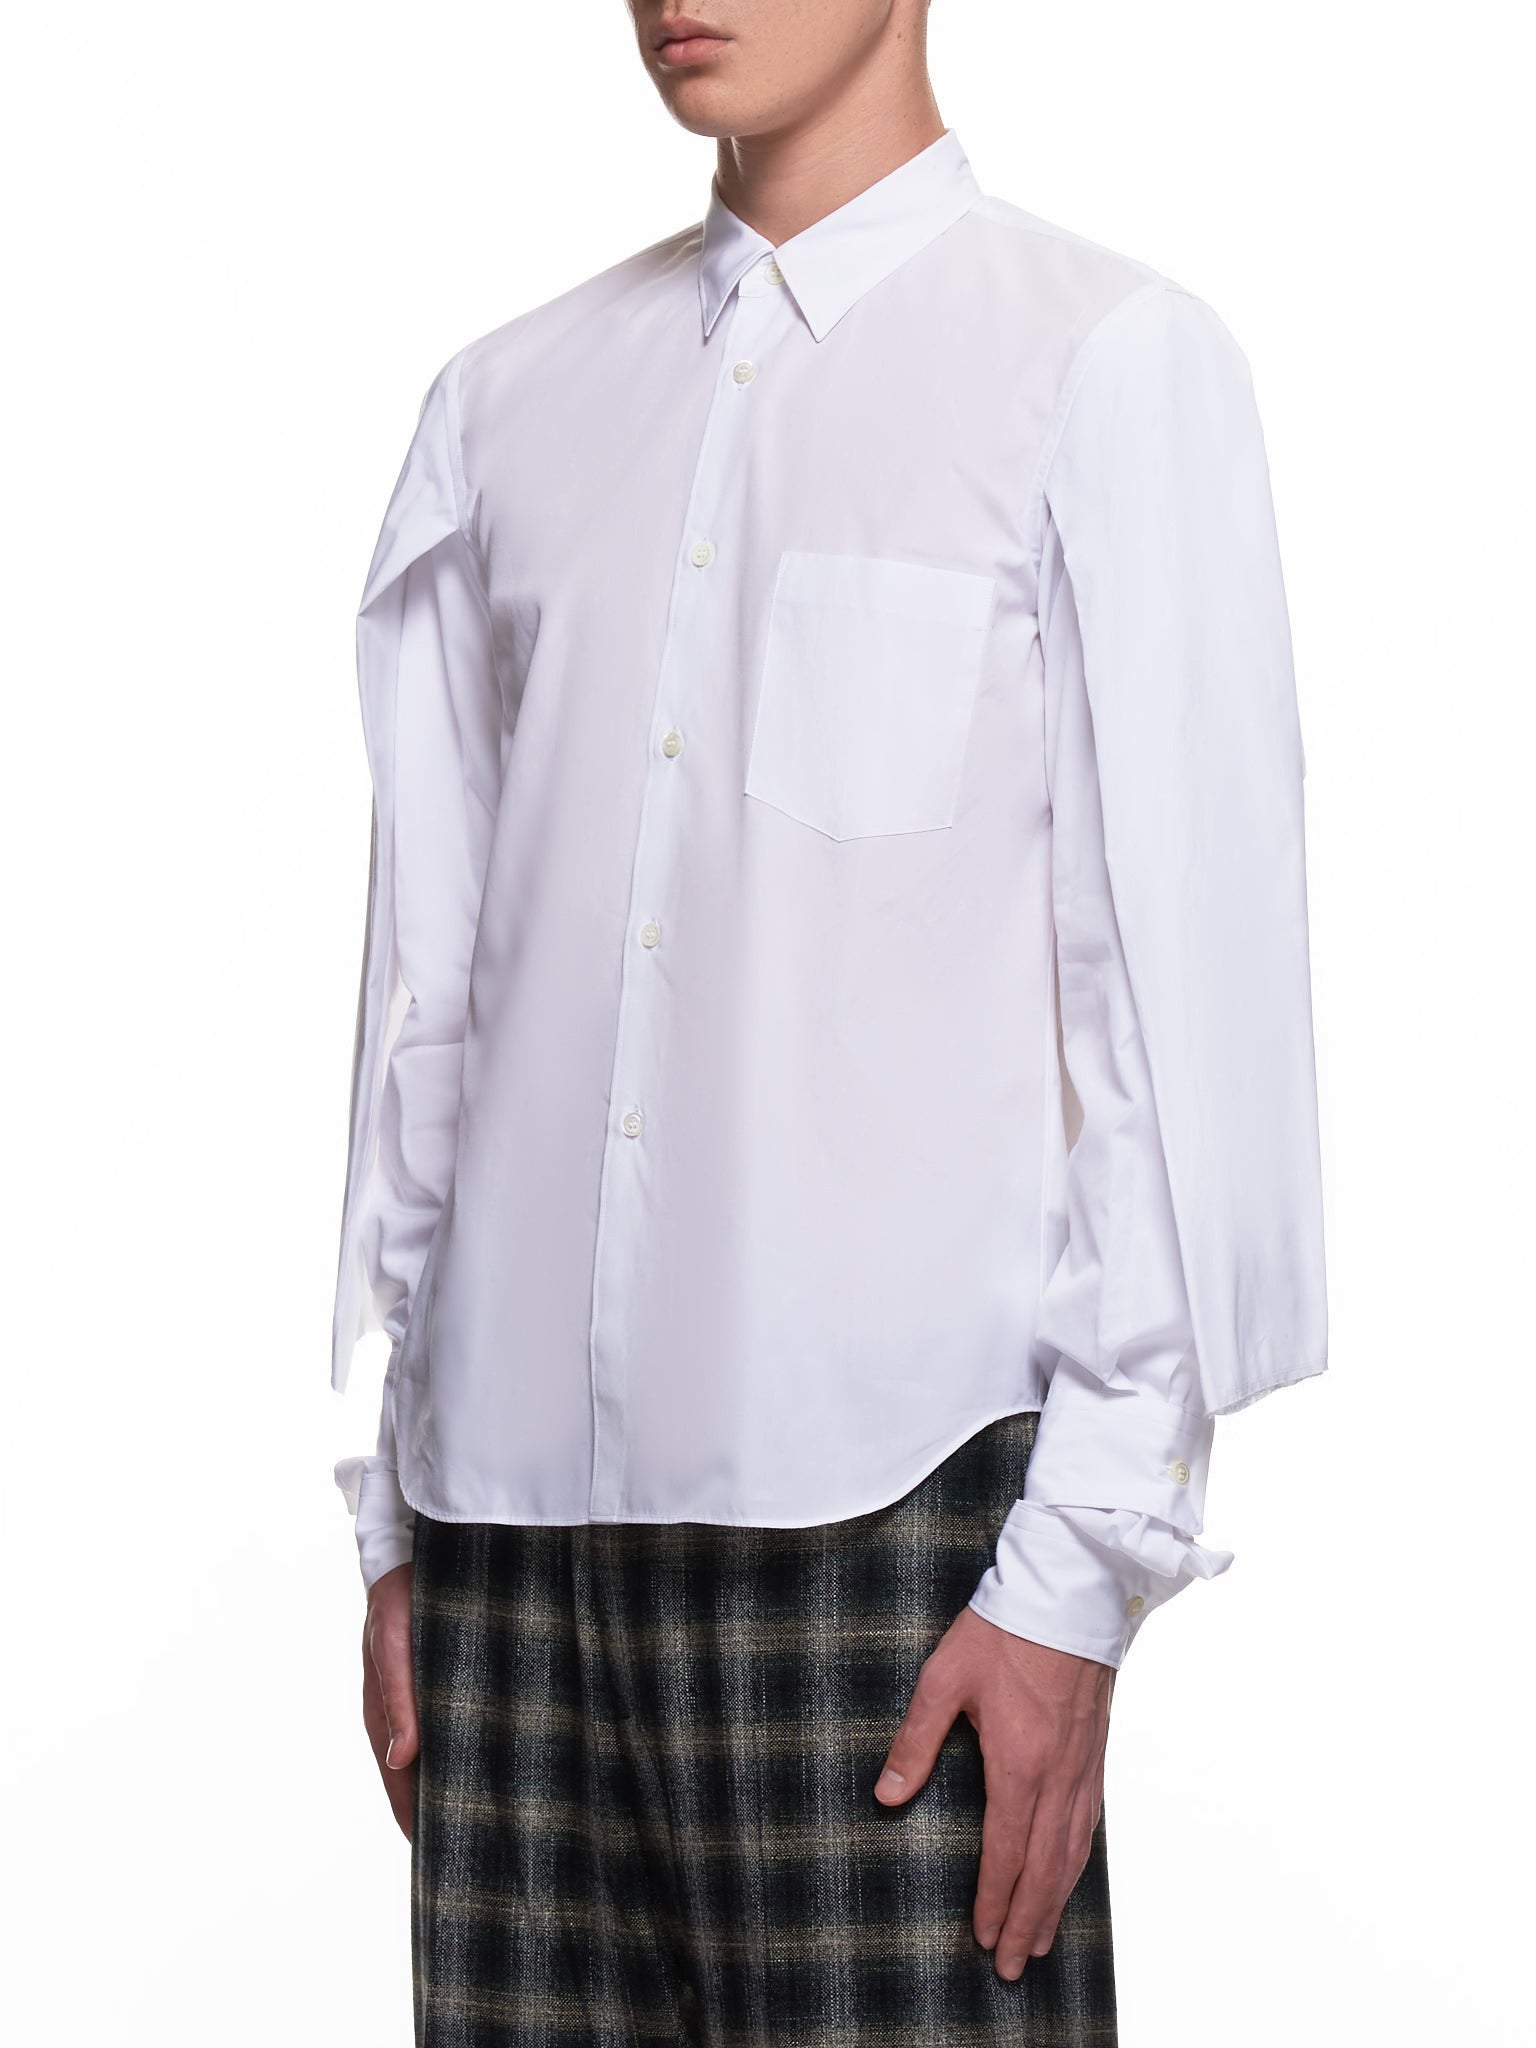 Sleeve Shirt Button-Up Layered (PF-B007-051-WHITE)